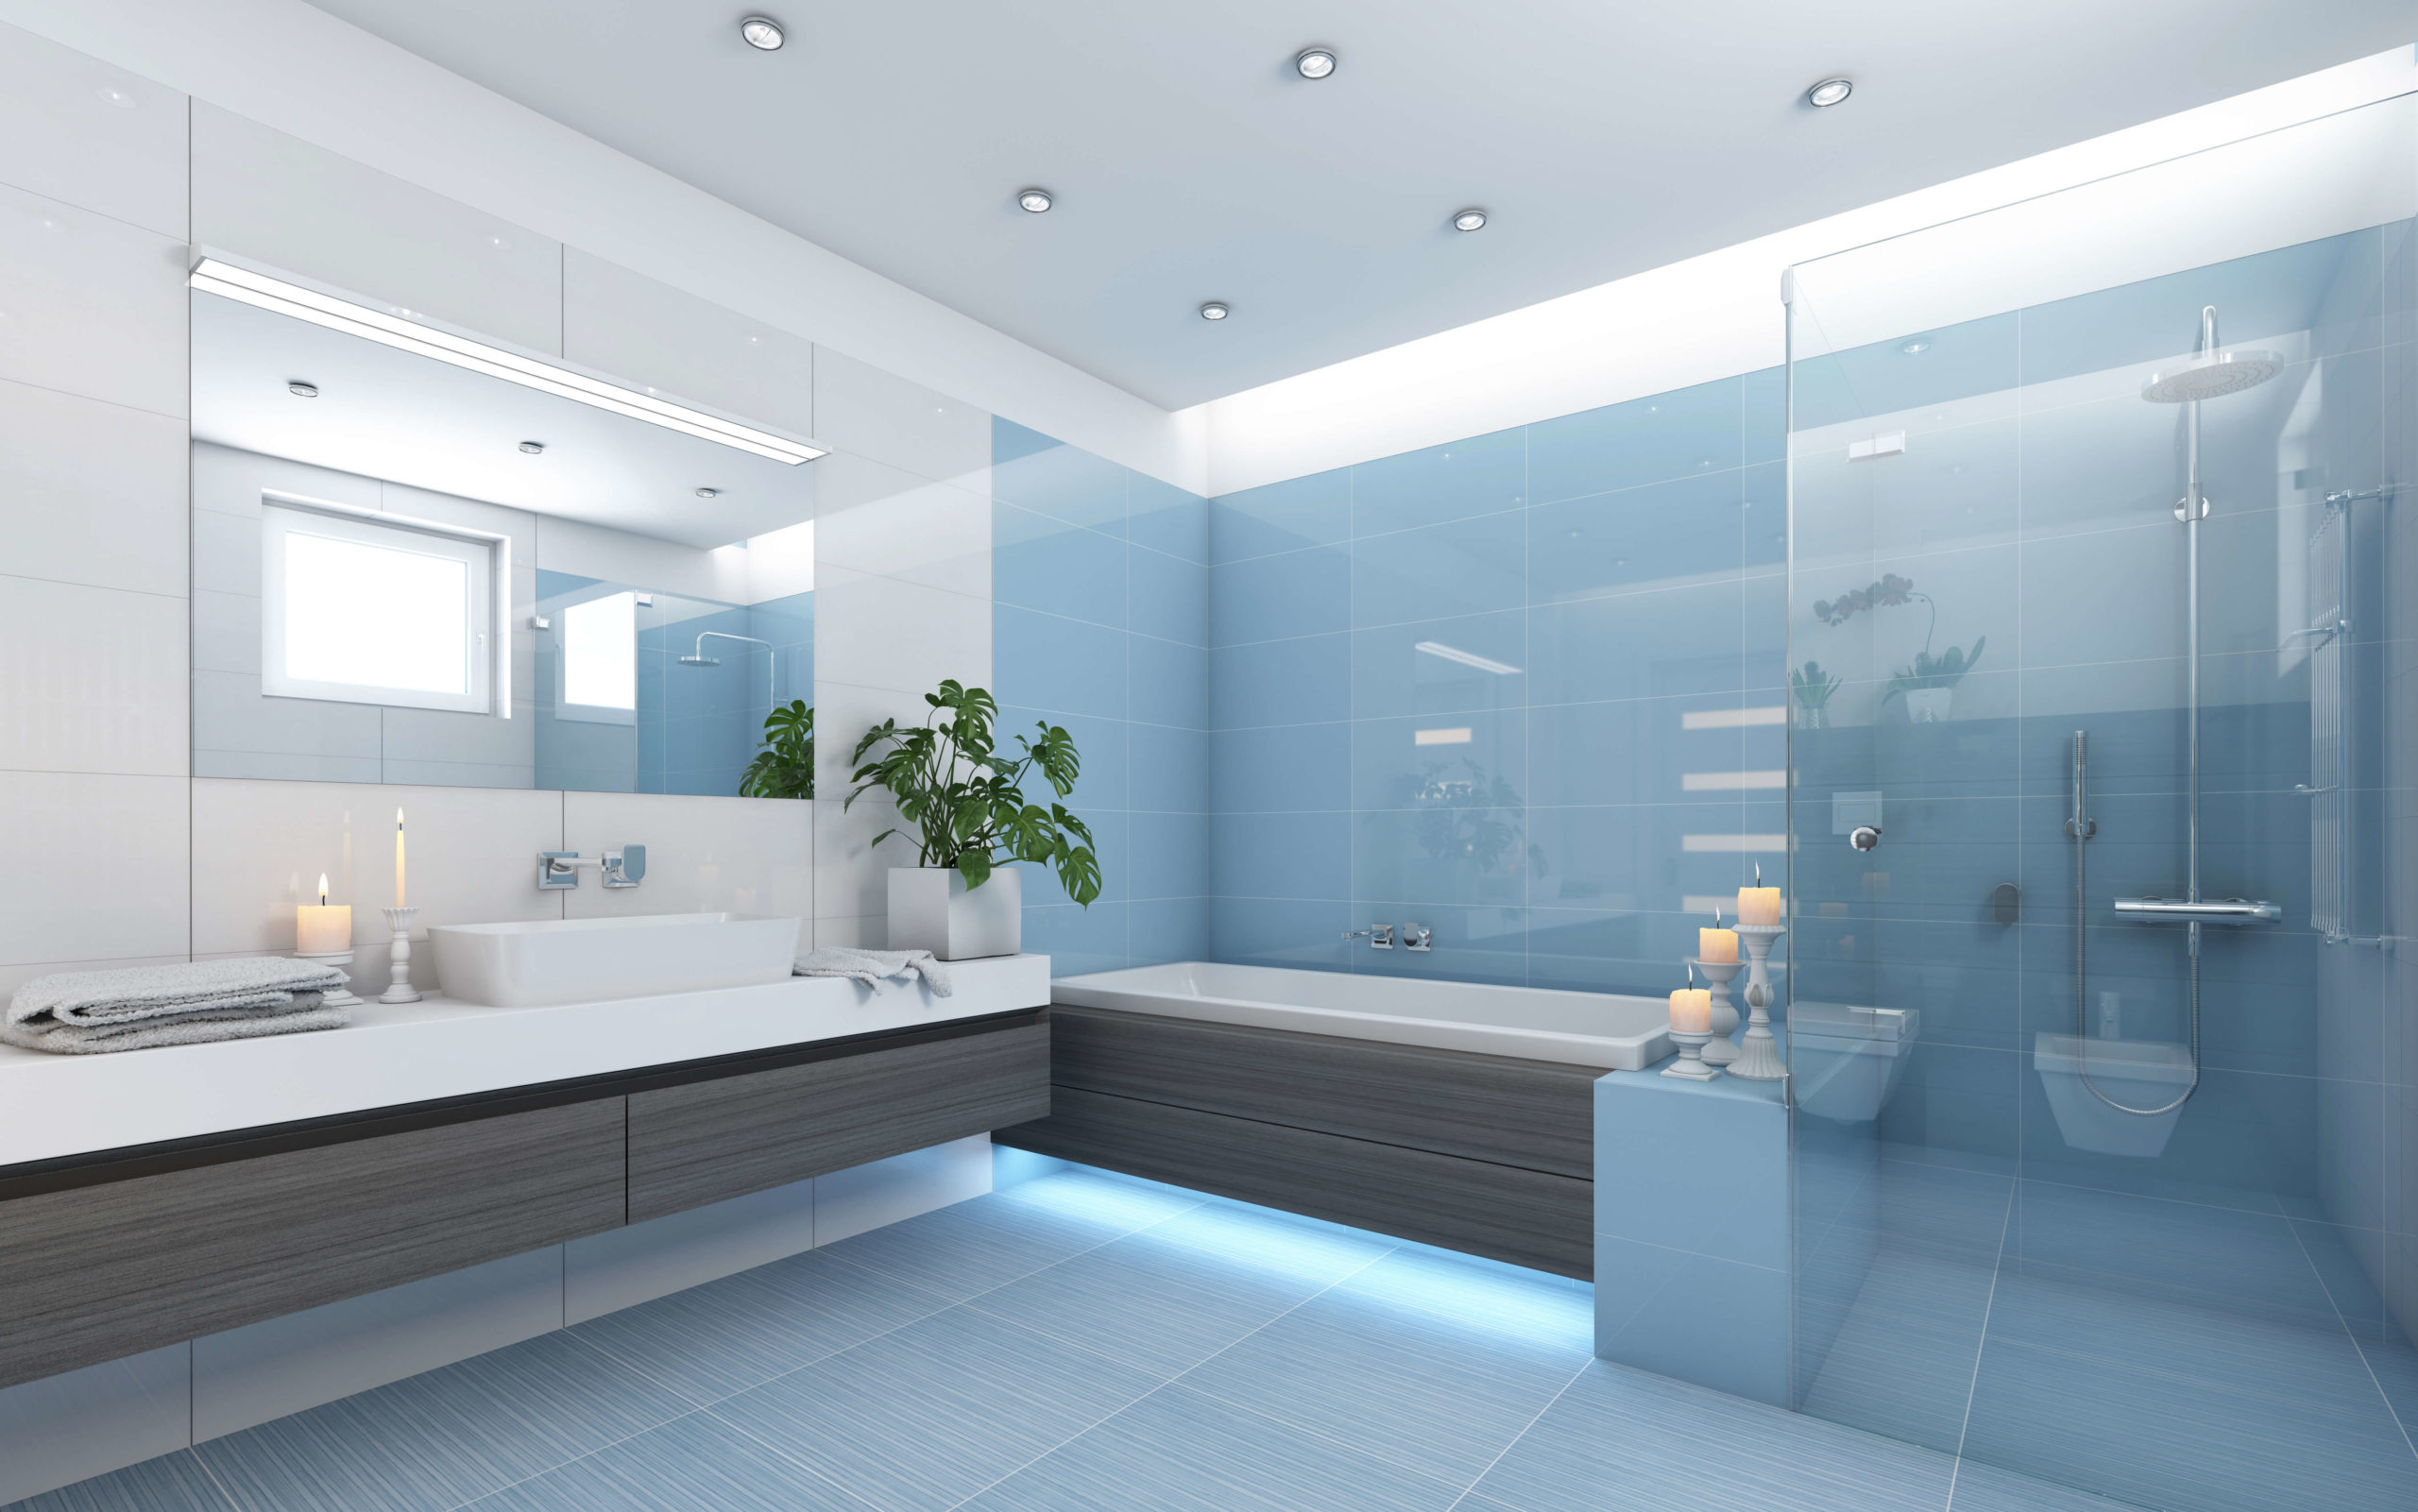 Светлая современная ванная комната. Накладная люстра Eglo 94878. Стильная ванная комната. Современная ванная комната. Ванная в светлых тонах.